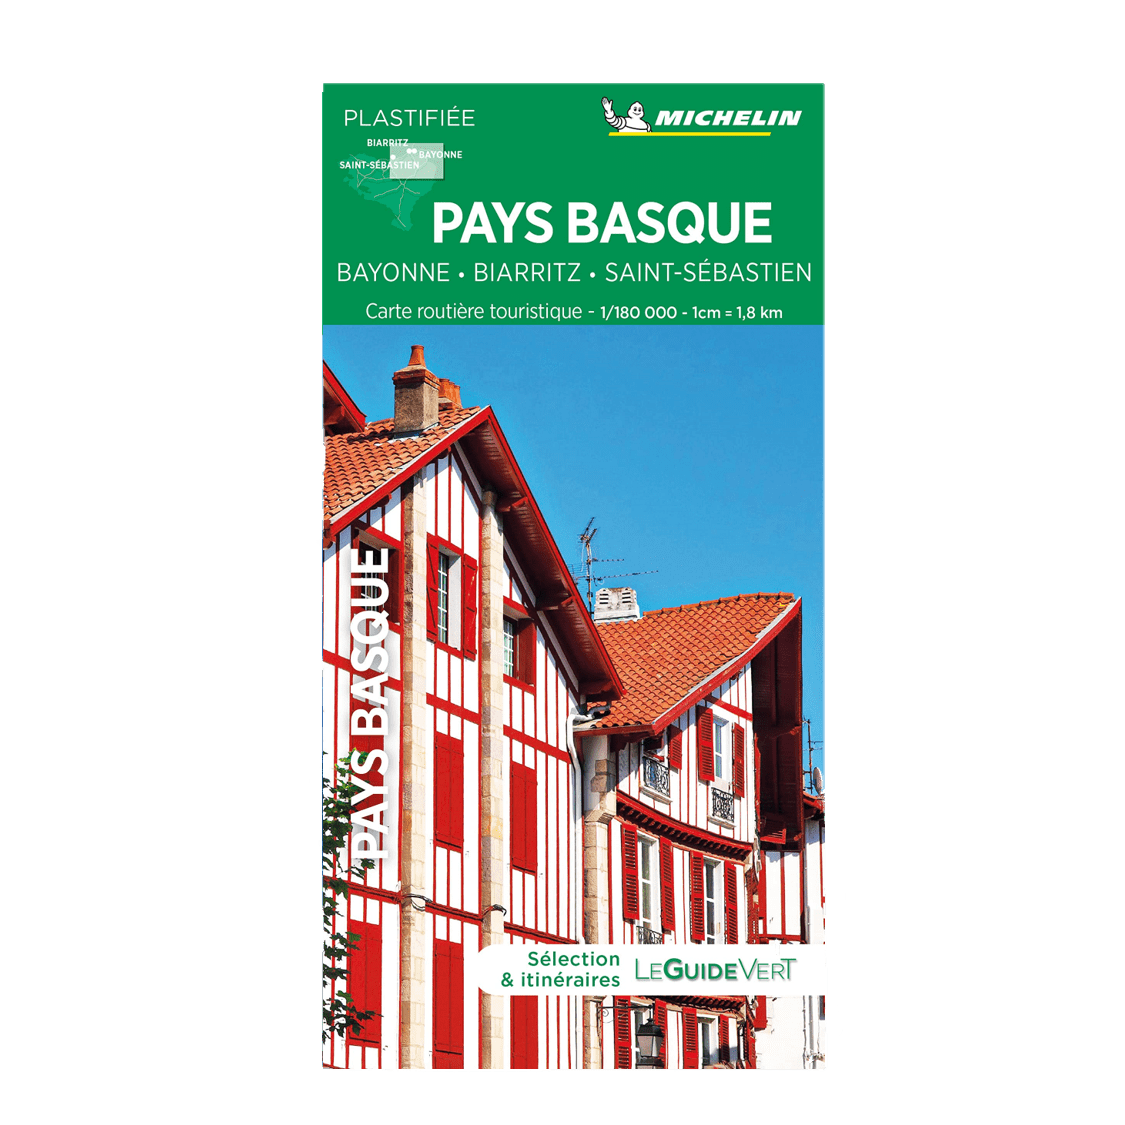 basque tourist card